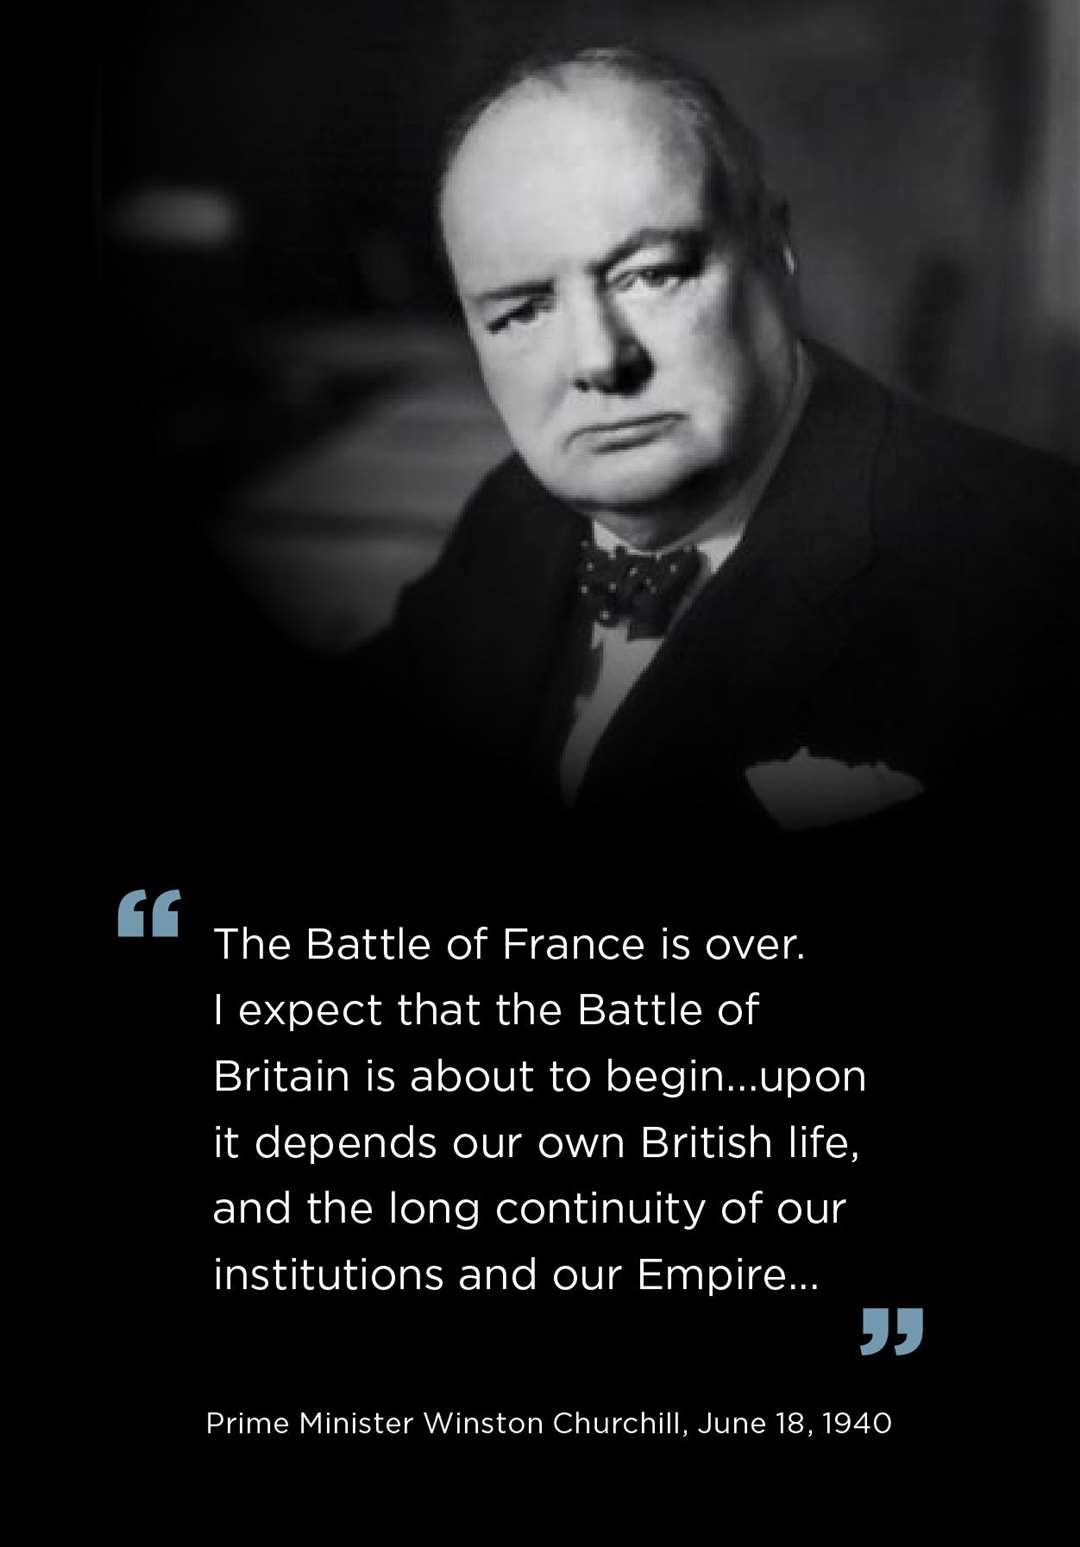 Winston Churchill's words